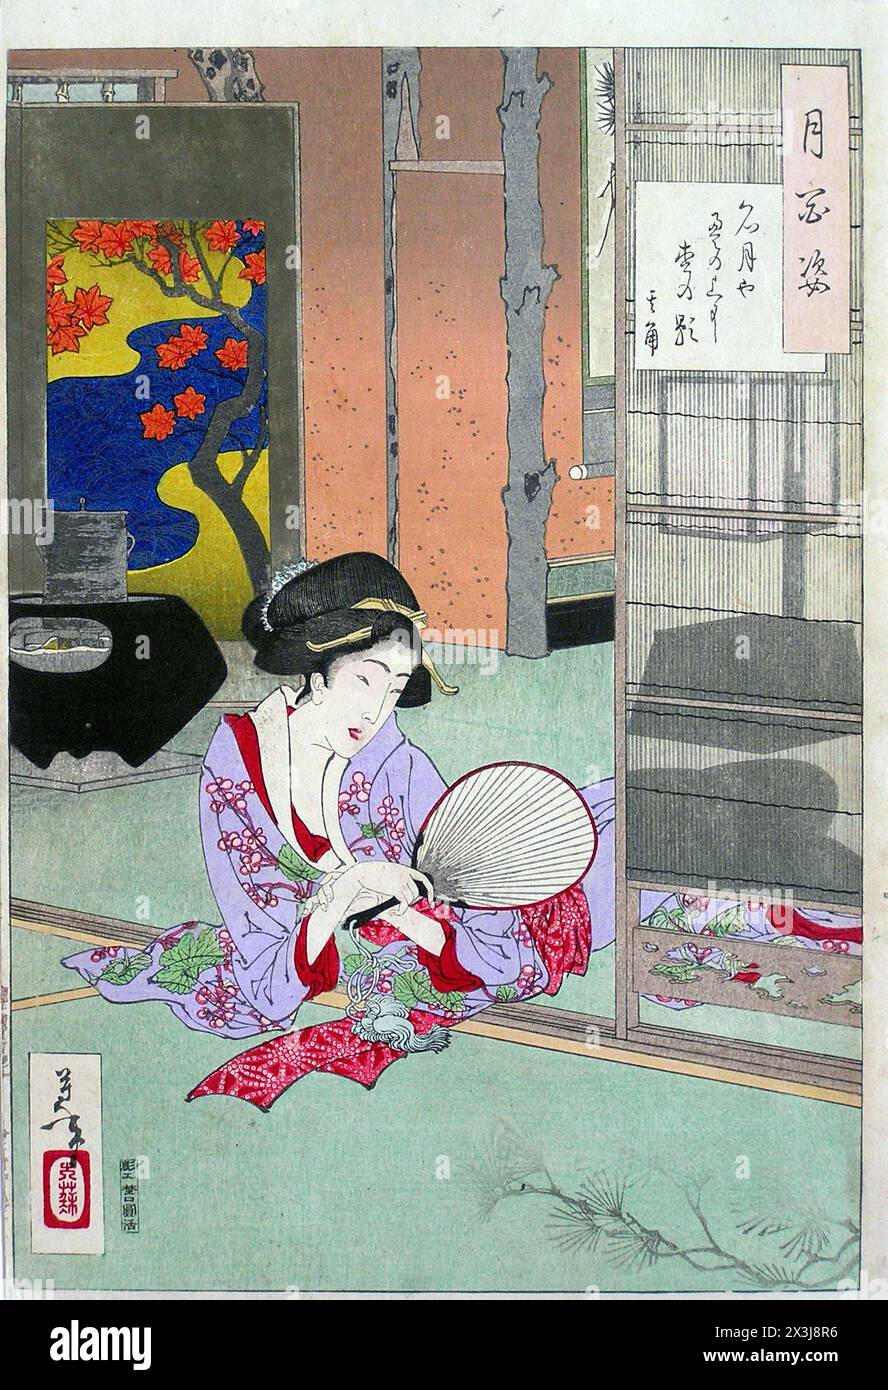 Tsukioka Yoshitoshi Holzschnitt aus der Serie „One Hundred Aspects of the Moon“, 1885-1882 - Japanische Zeichnung Illustration Stockfoto